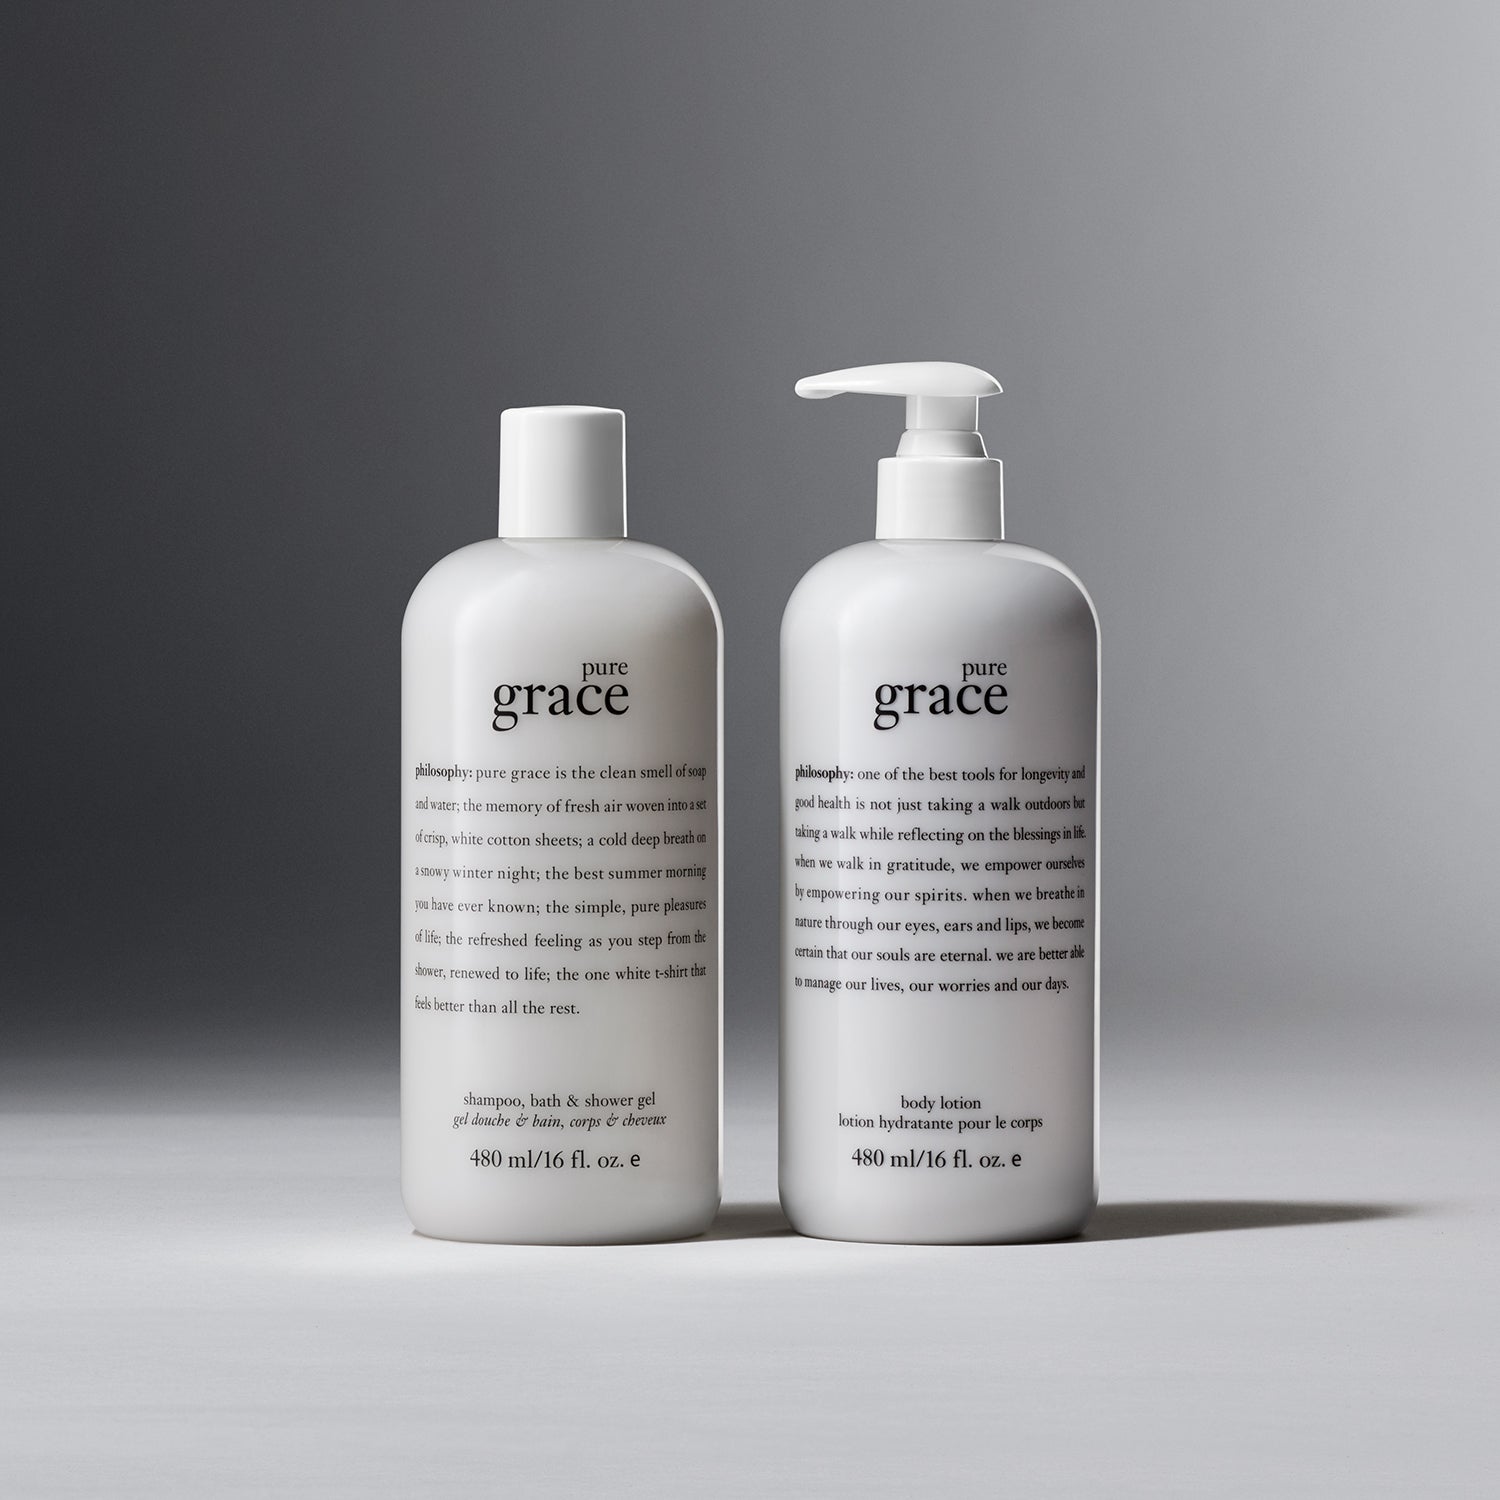 Philosophy Pure Grace Nude Rose Shampoo, Bath & Shower Gel - Totality  Medispa and Skincare